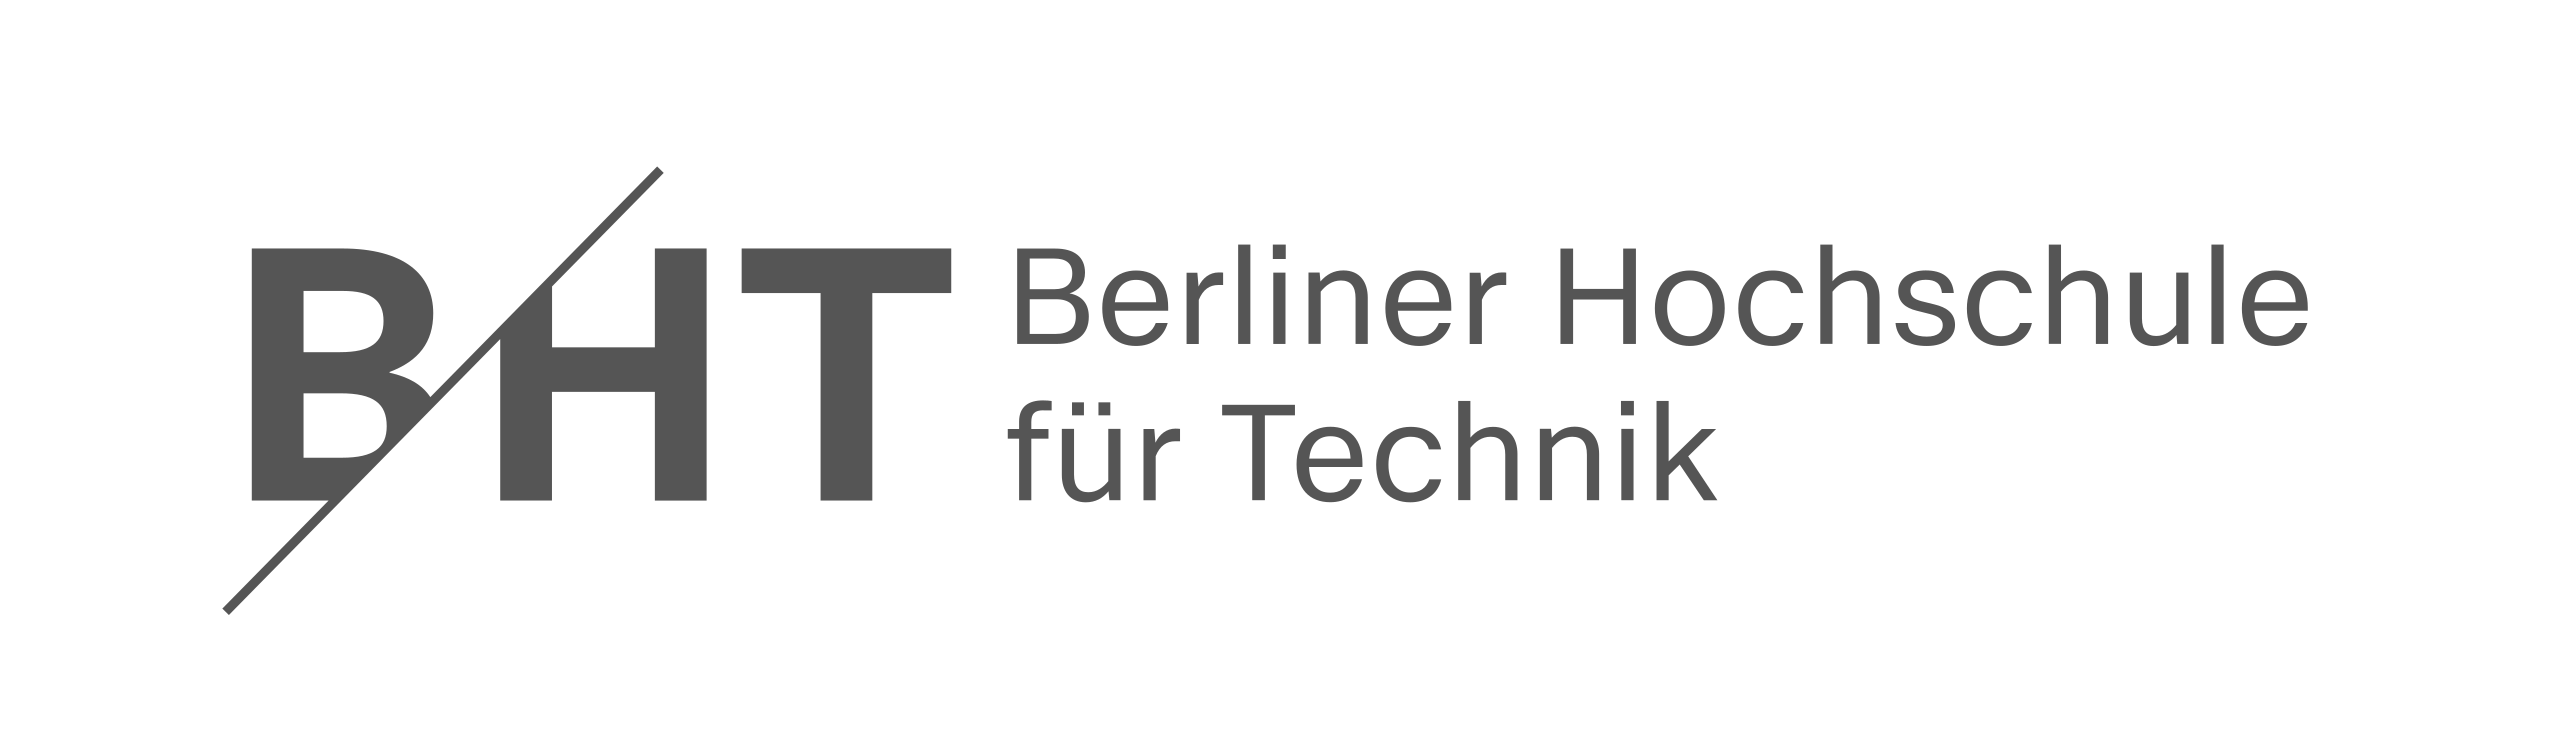 Berlin University of Technology (BHT) Germany